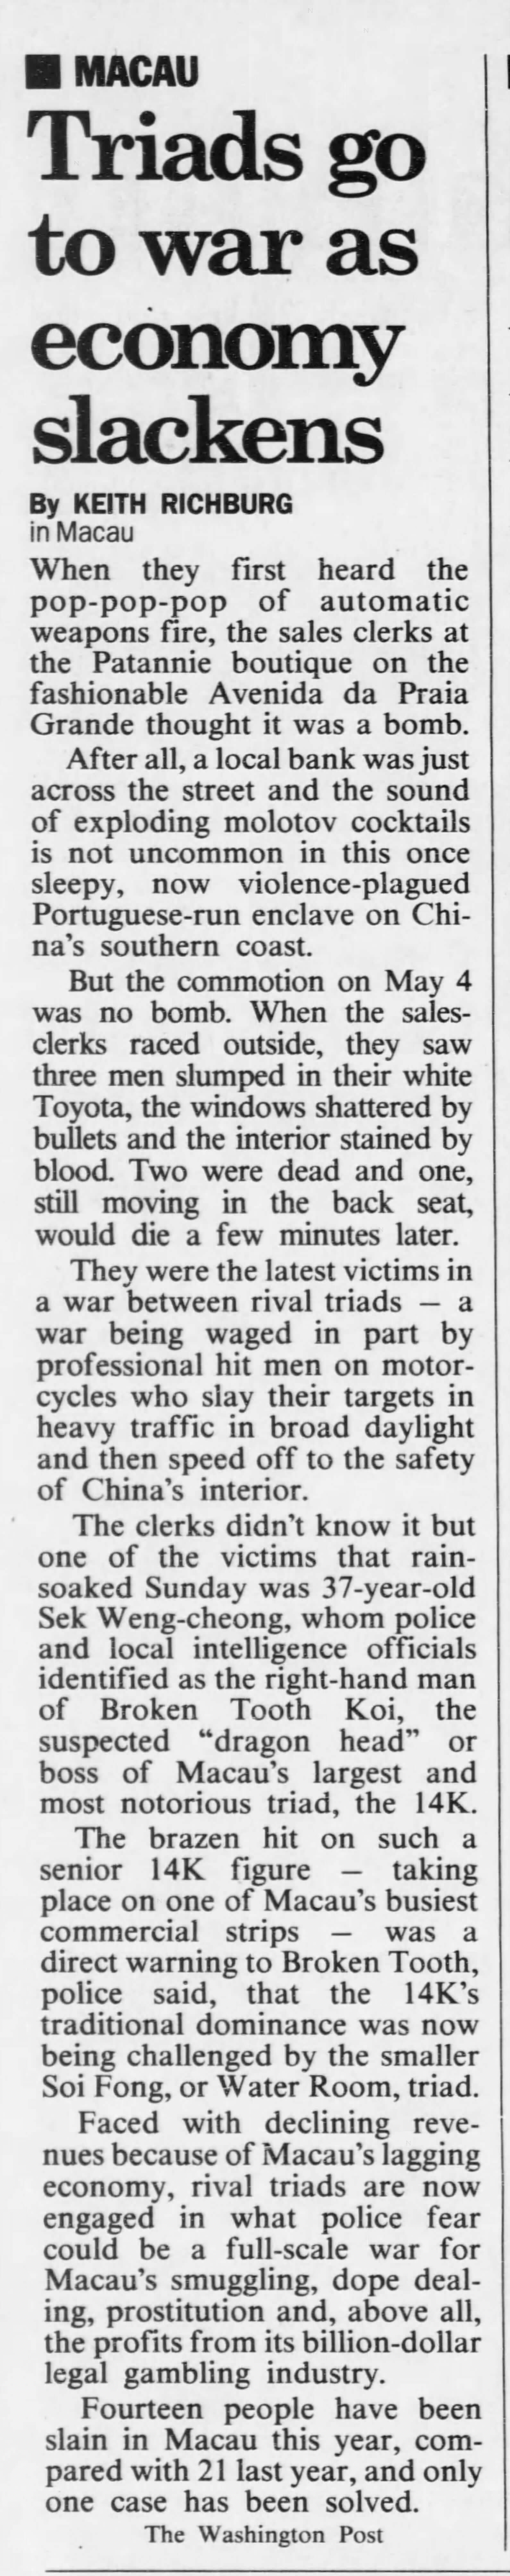  Washington Post reported on Macau in 1997